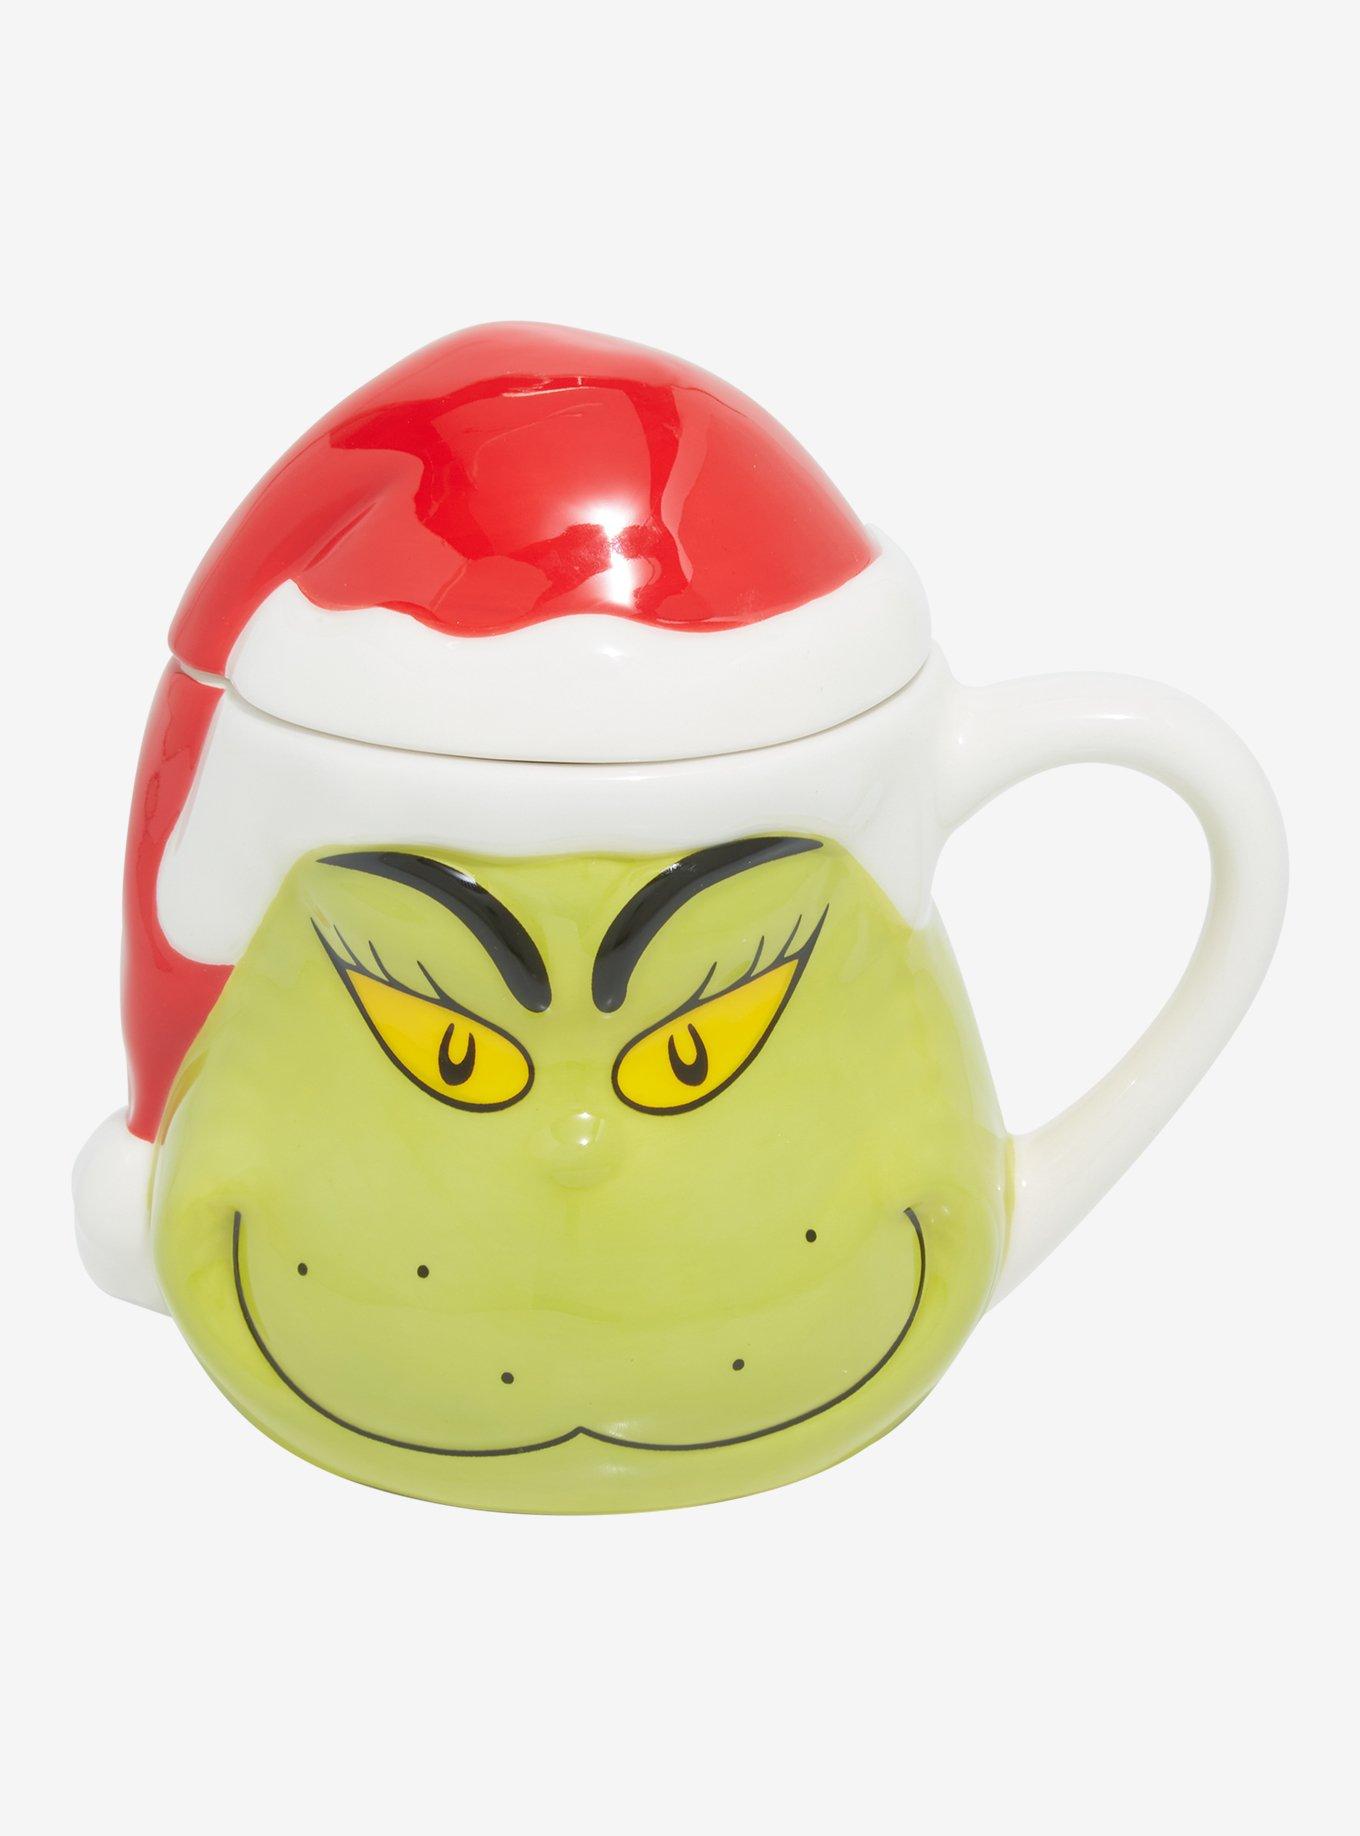 Grinch Mug, Grinch Family, Grinch Gift, Secret Santa Gift, Christmas Mugs,  Christmas Ideas for Kids, Hot Chocolate Mugs, Christmas Gifts 